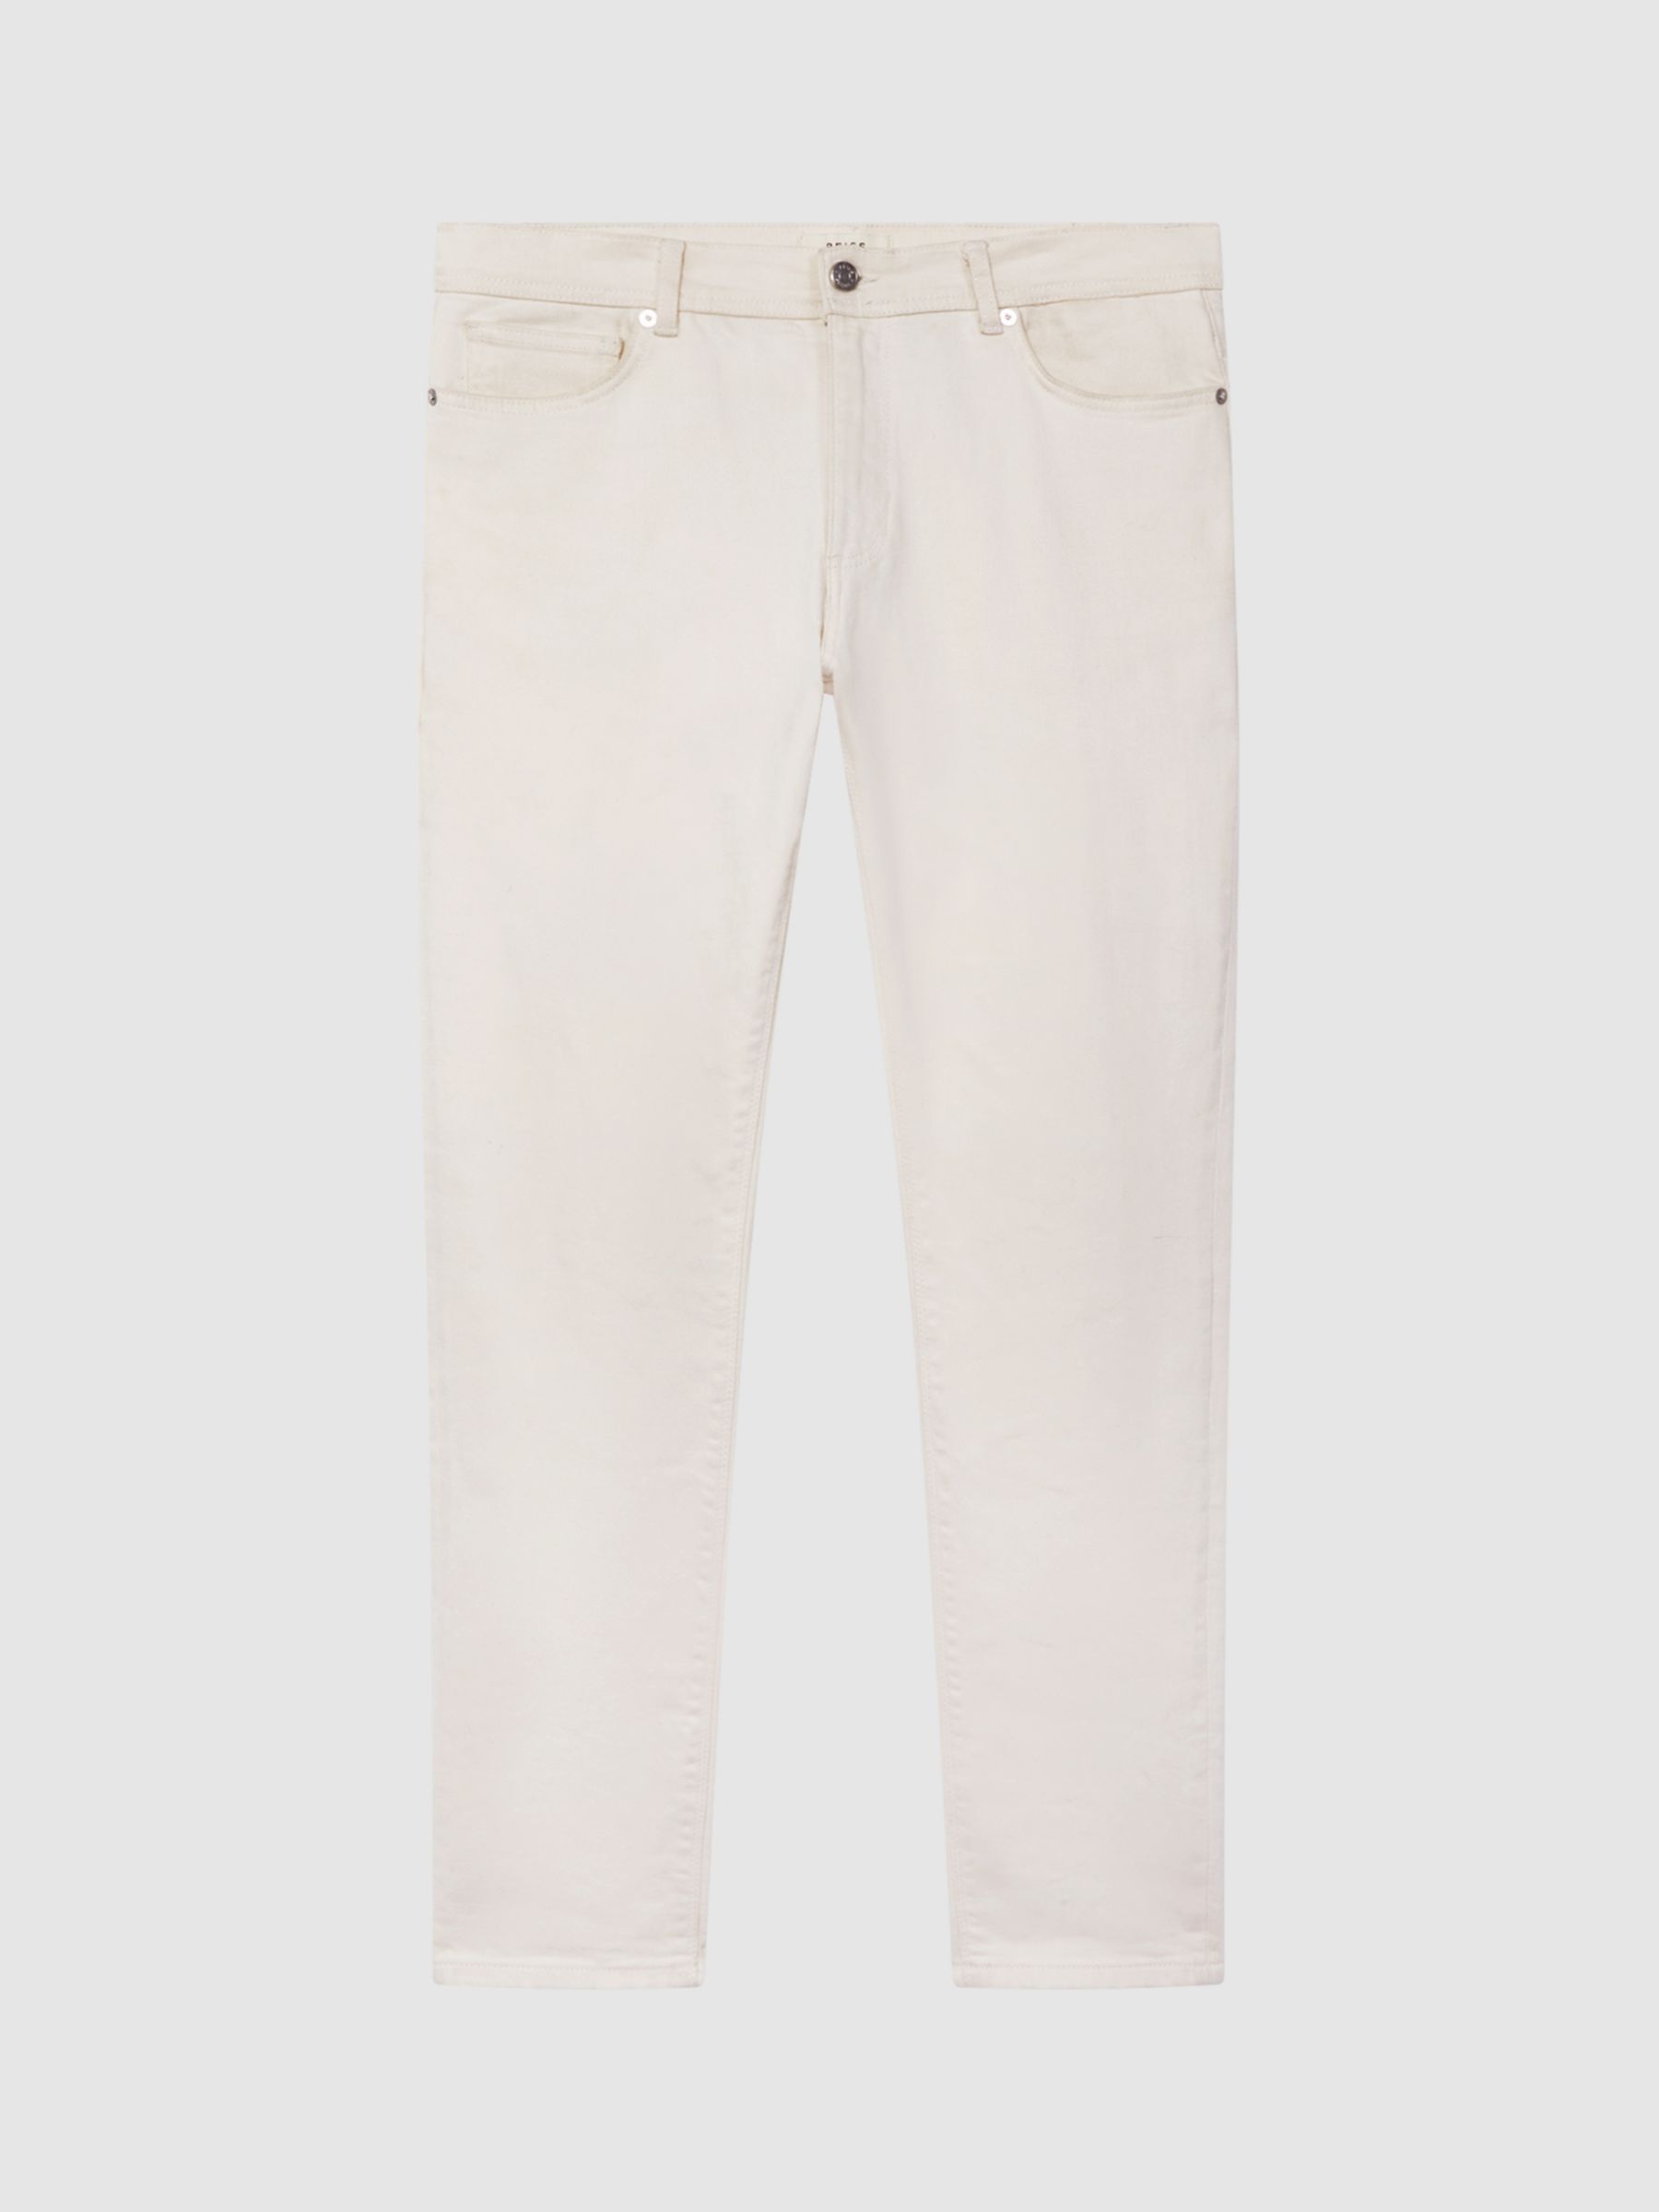 Buy Reiss Santorini Slim Fit Stretch Jeans, Ecru Online at johnlewis.com